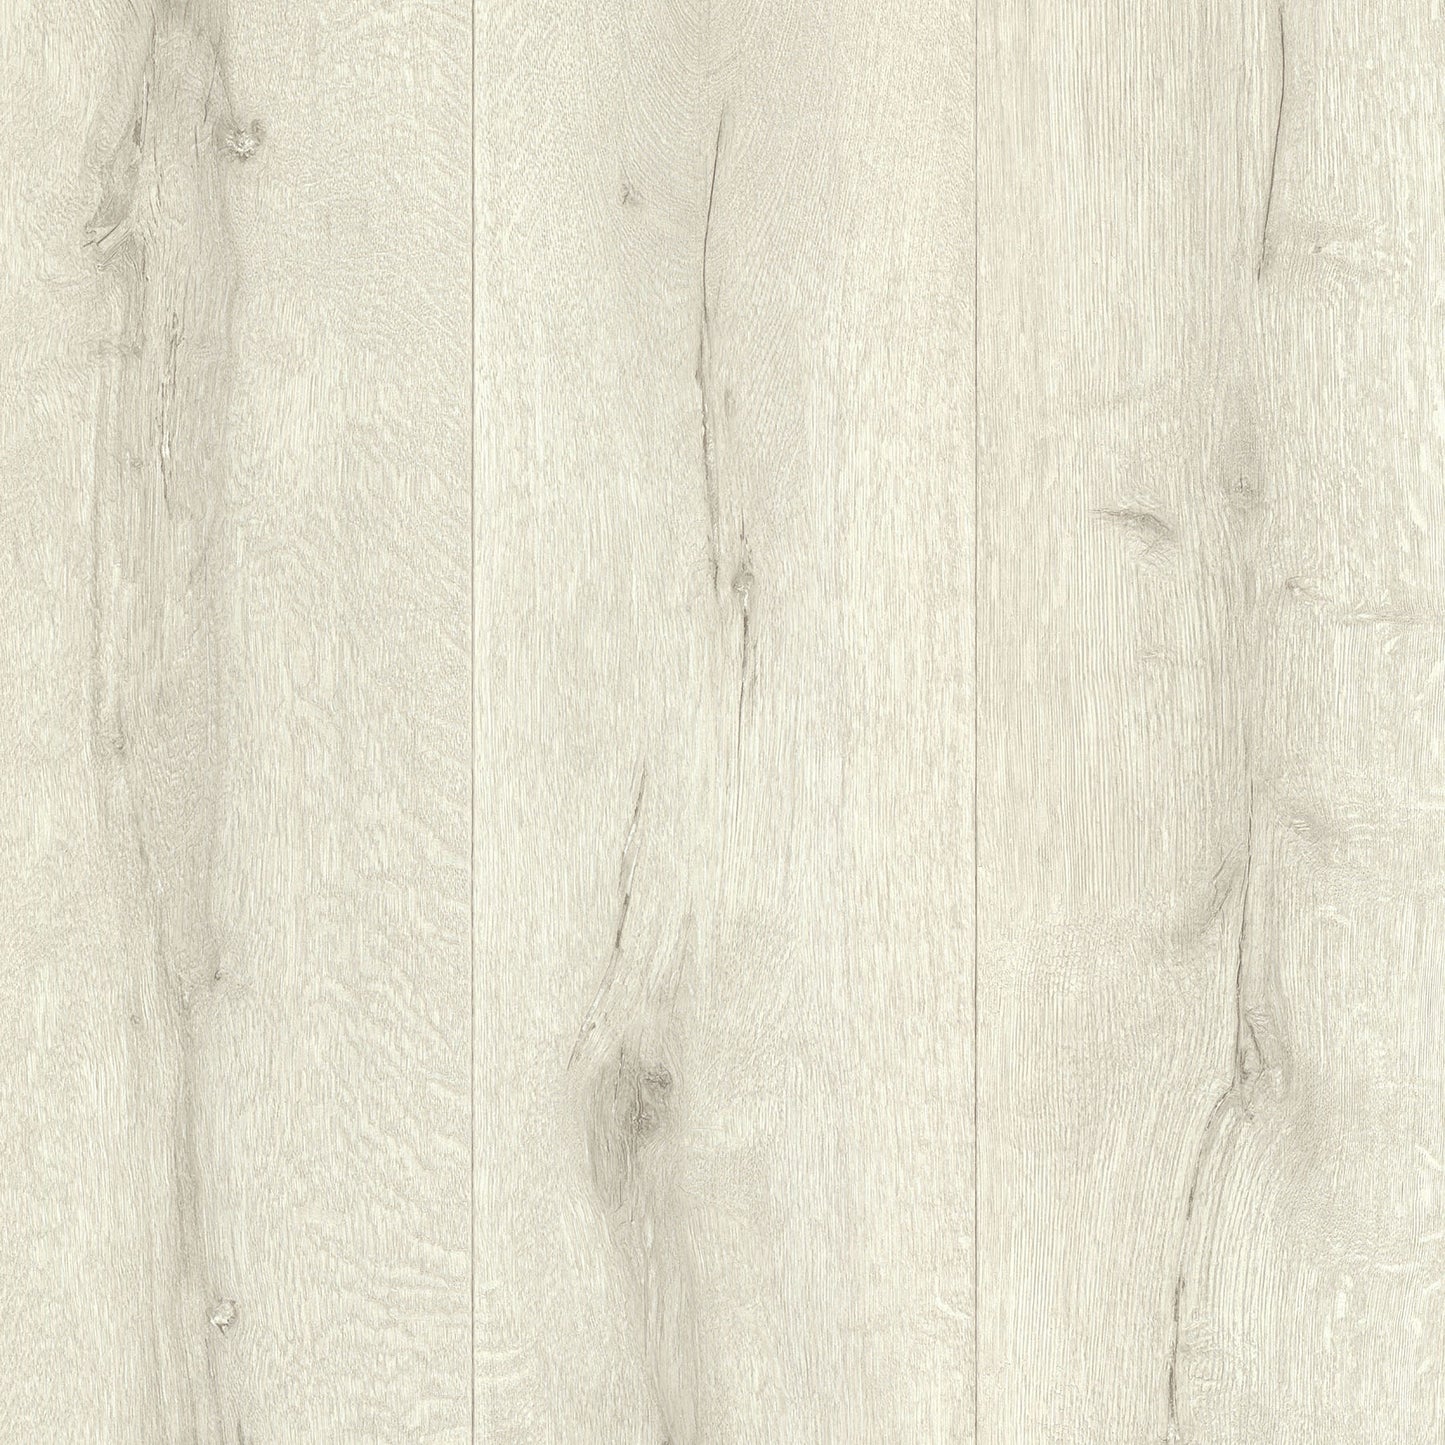 Acquire 2773-514407 Neutral Black White Whites & Off-Whites Wood Wallpaper by Advantage